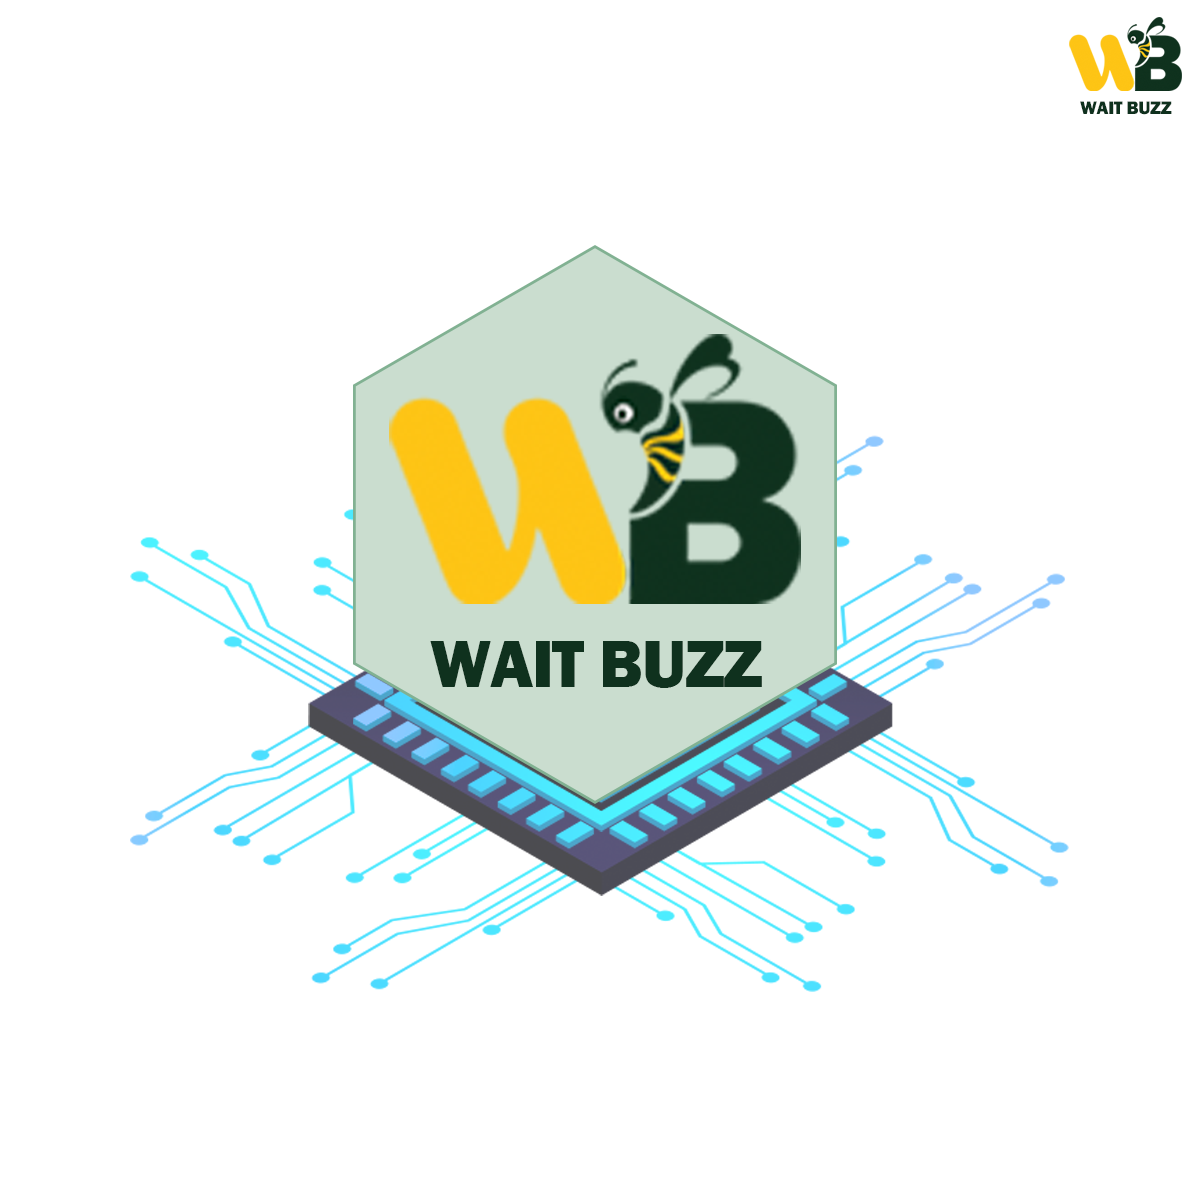 WaitBuzz: شركة الشرق الأوسط الرائدة في مجال تقنية المعلومات